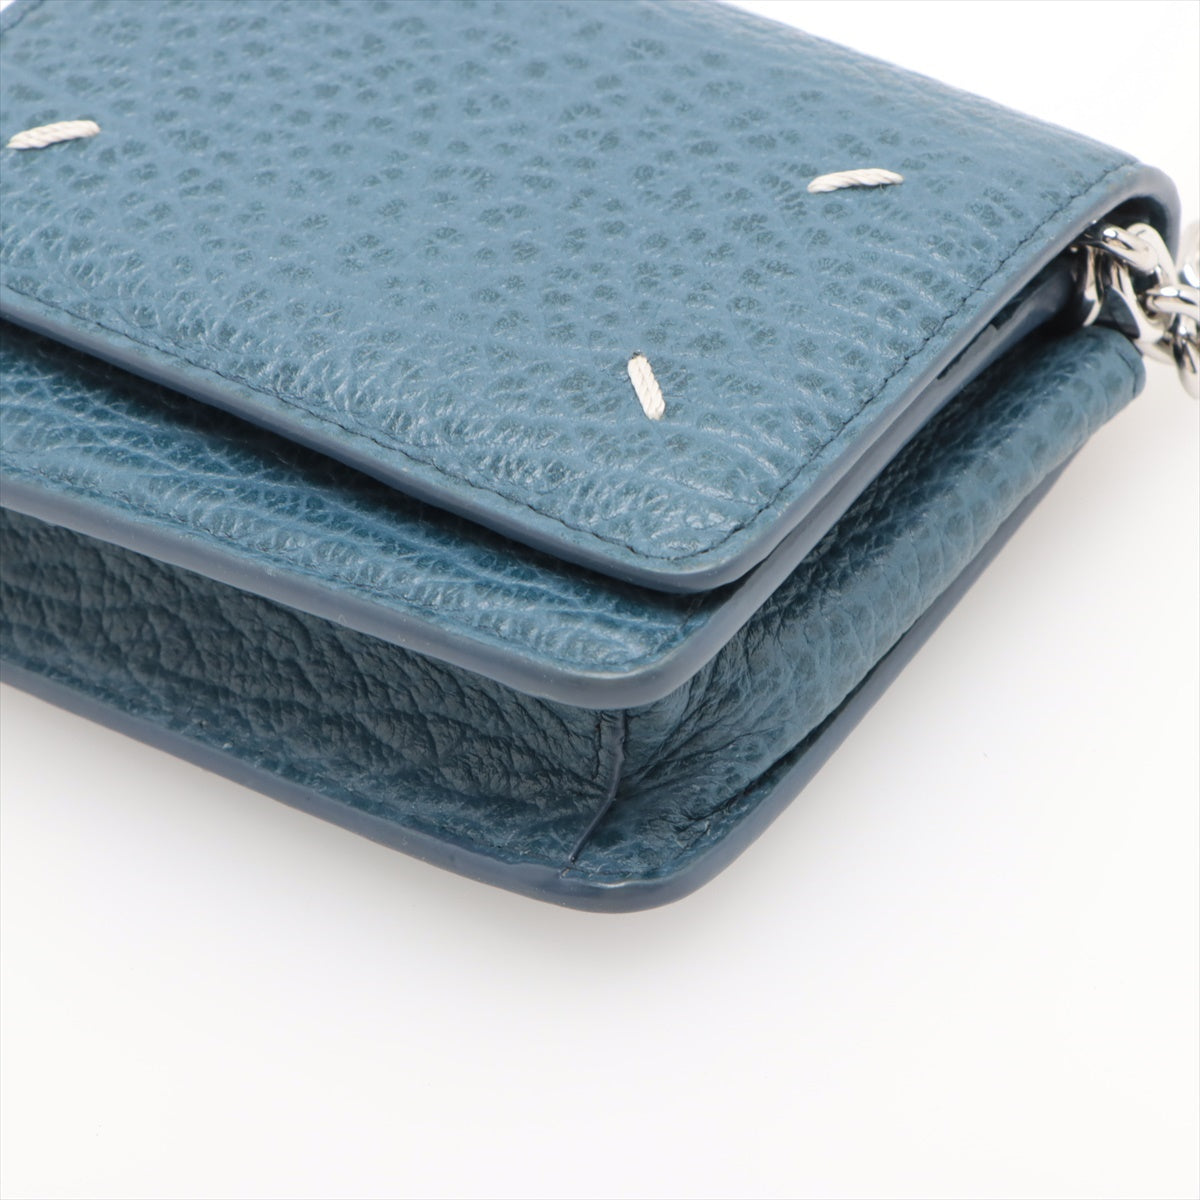 Maison Margiela 4 stitches Leather Chain wallet Blue